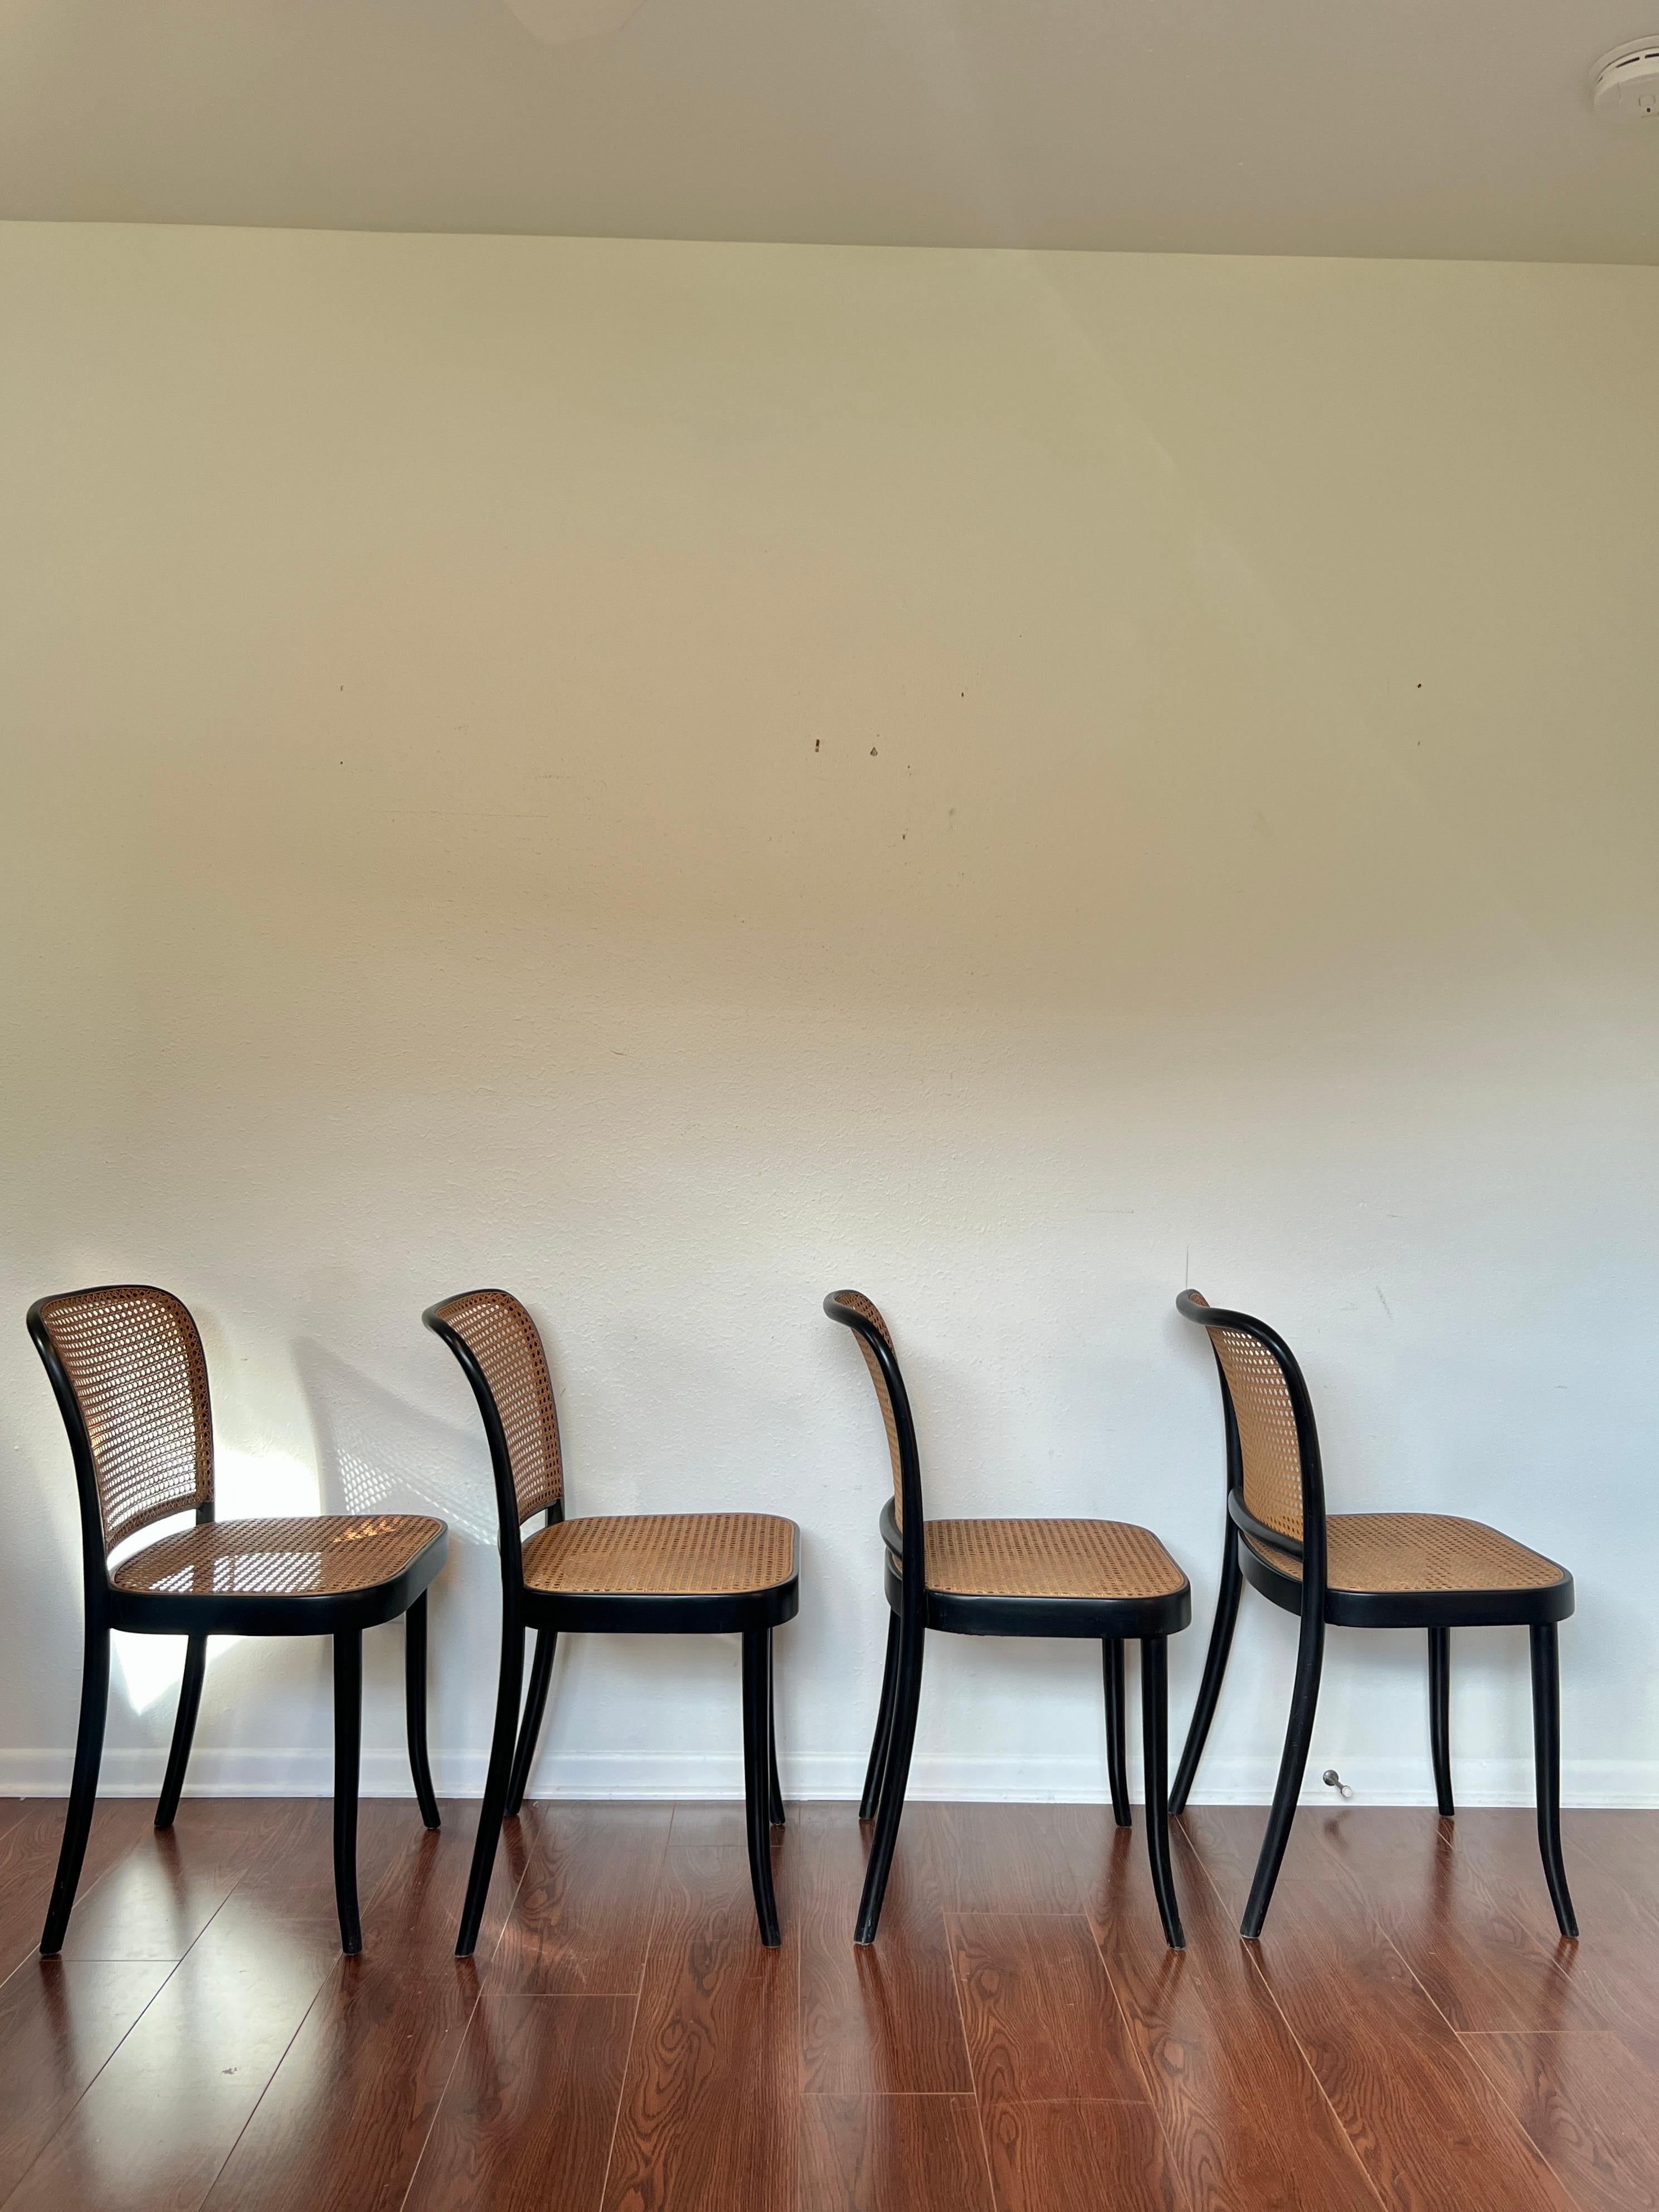 European A set of of 4 original chairs by Josef Hoffmann for Thonet, circa 1960s